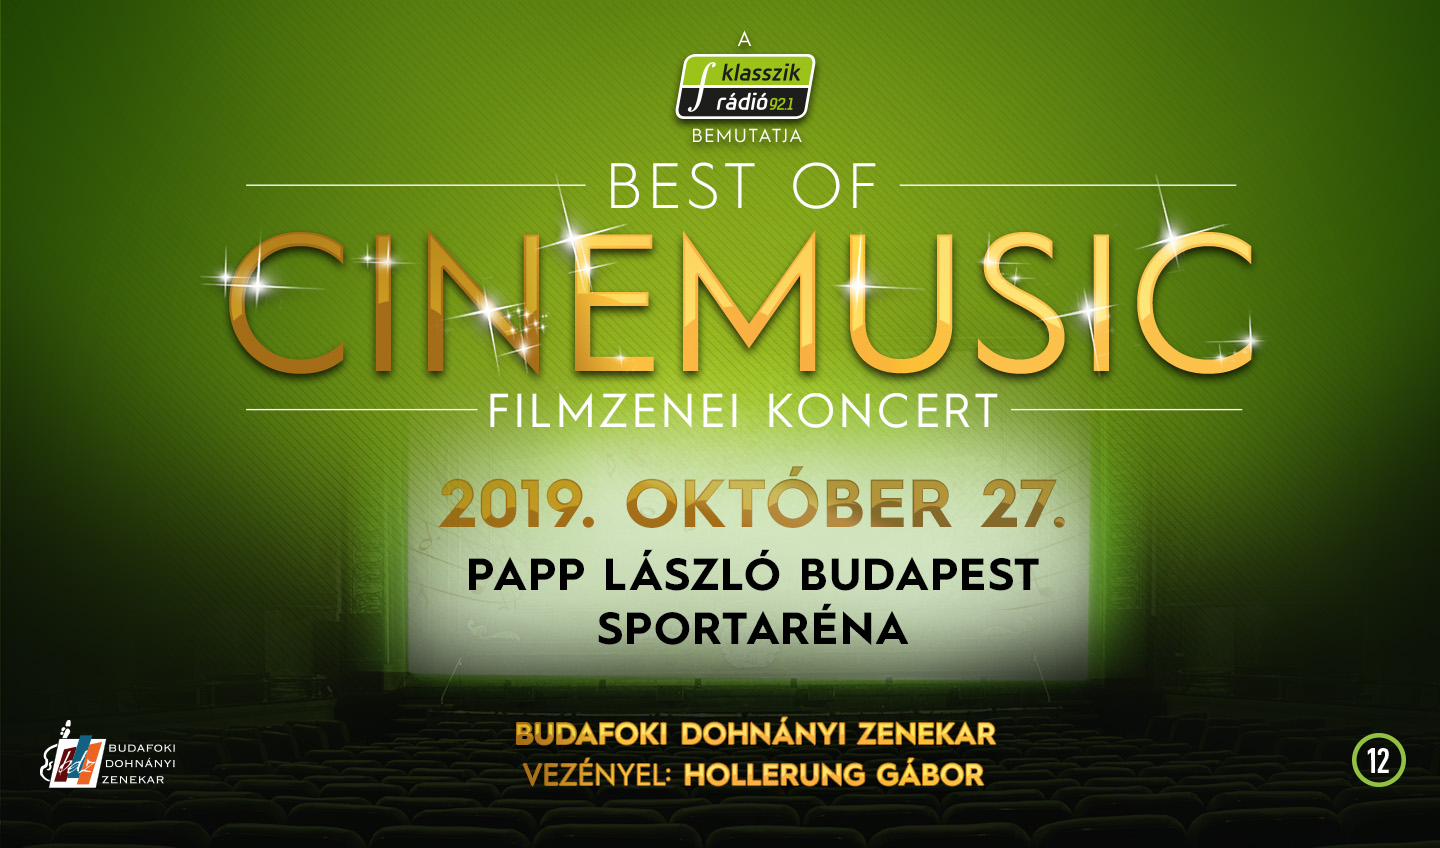 Best of Cinemusic szimfónikus filmzenei koncert 2019